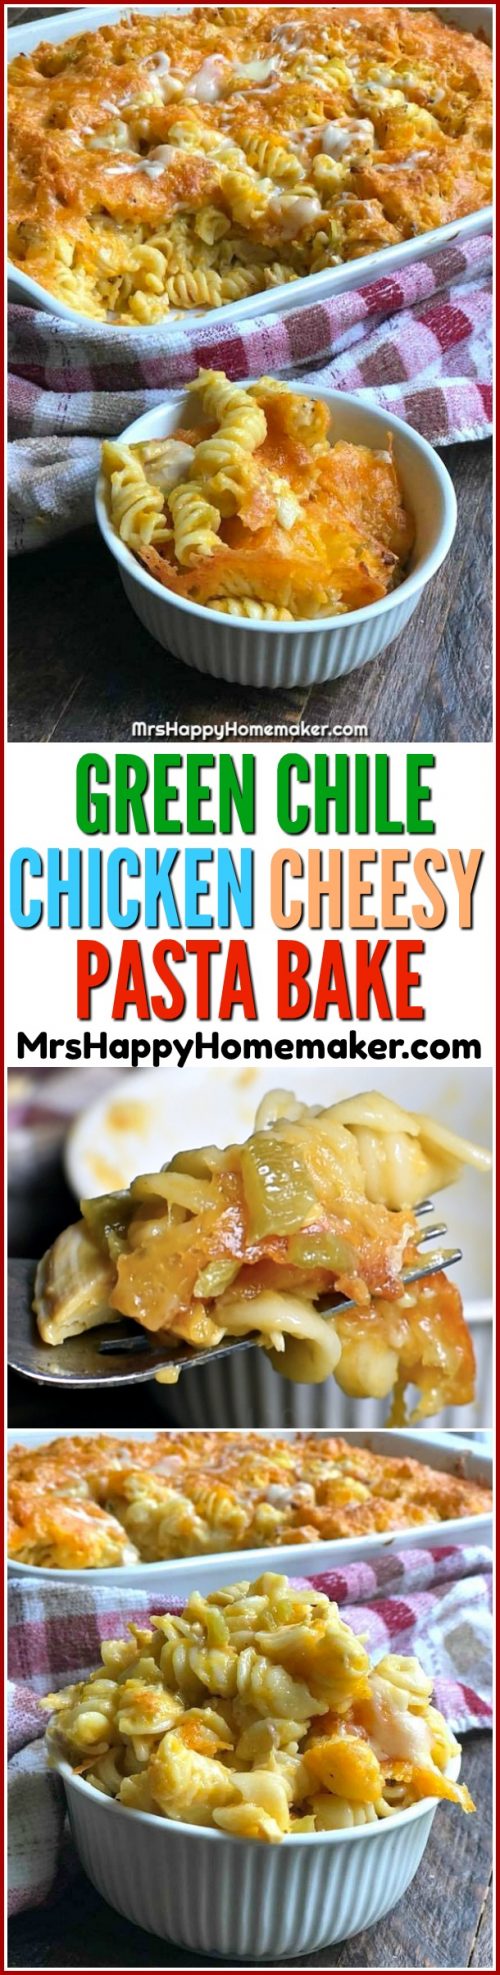 Green Chile Chicken Cheesy Pasta Bake | MrsHappyHomemaker.com @mrshappyhomemaker